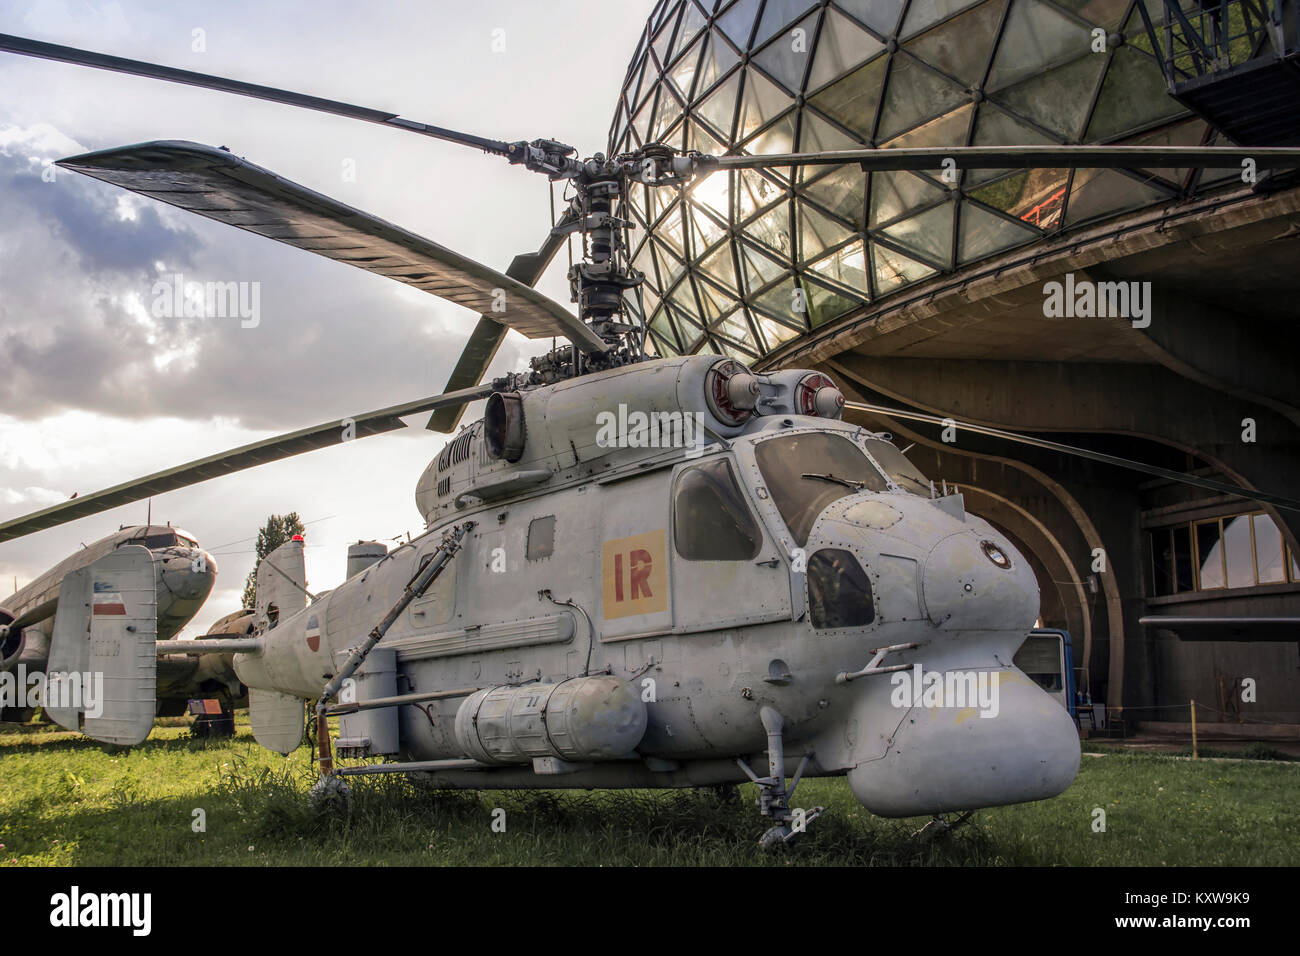 BELGRADE, SERBIA - Kamov Ka 25 Soviet dual rotor naval helicopter (NATO-Codename: Hormone) presented on the yard of the Belgrade Aviation Museum Stock Photo